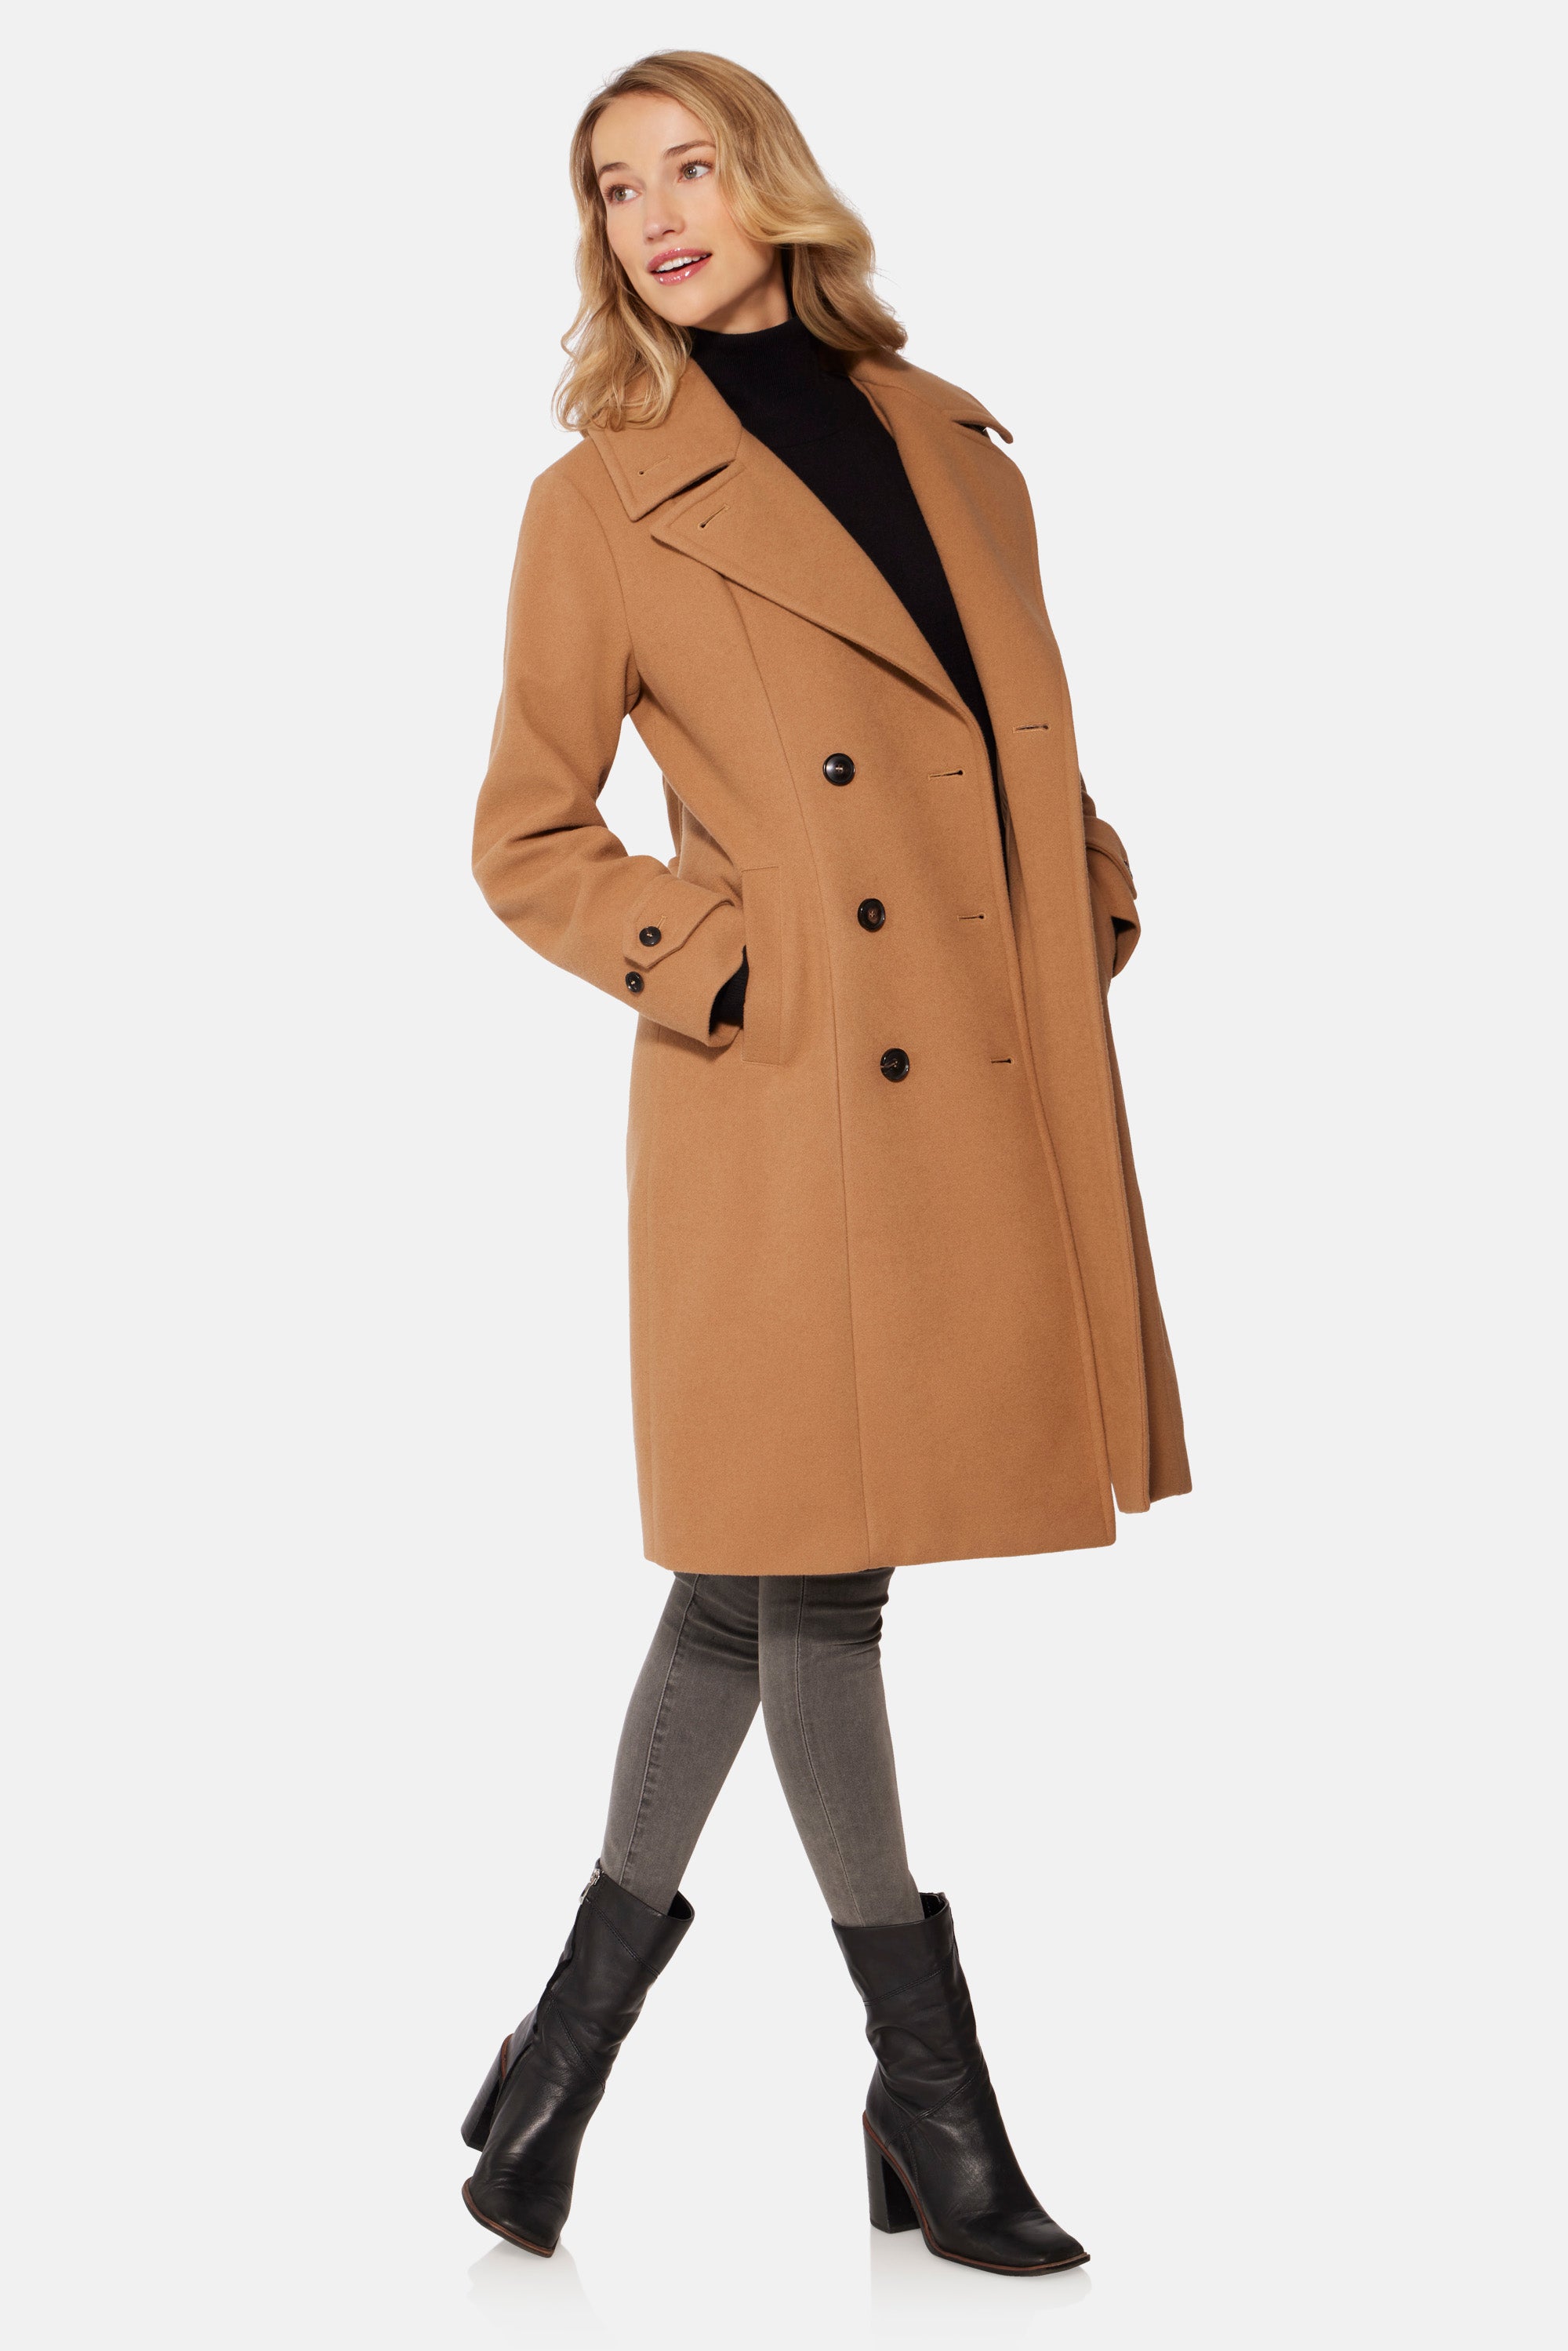 Grey Lined Coat/cashmere Wool Coat/winter Coat/belted Coat/xxl 